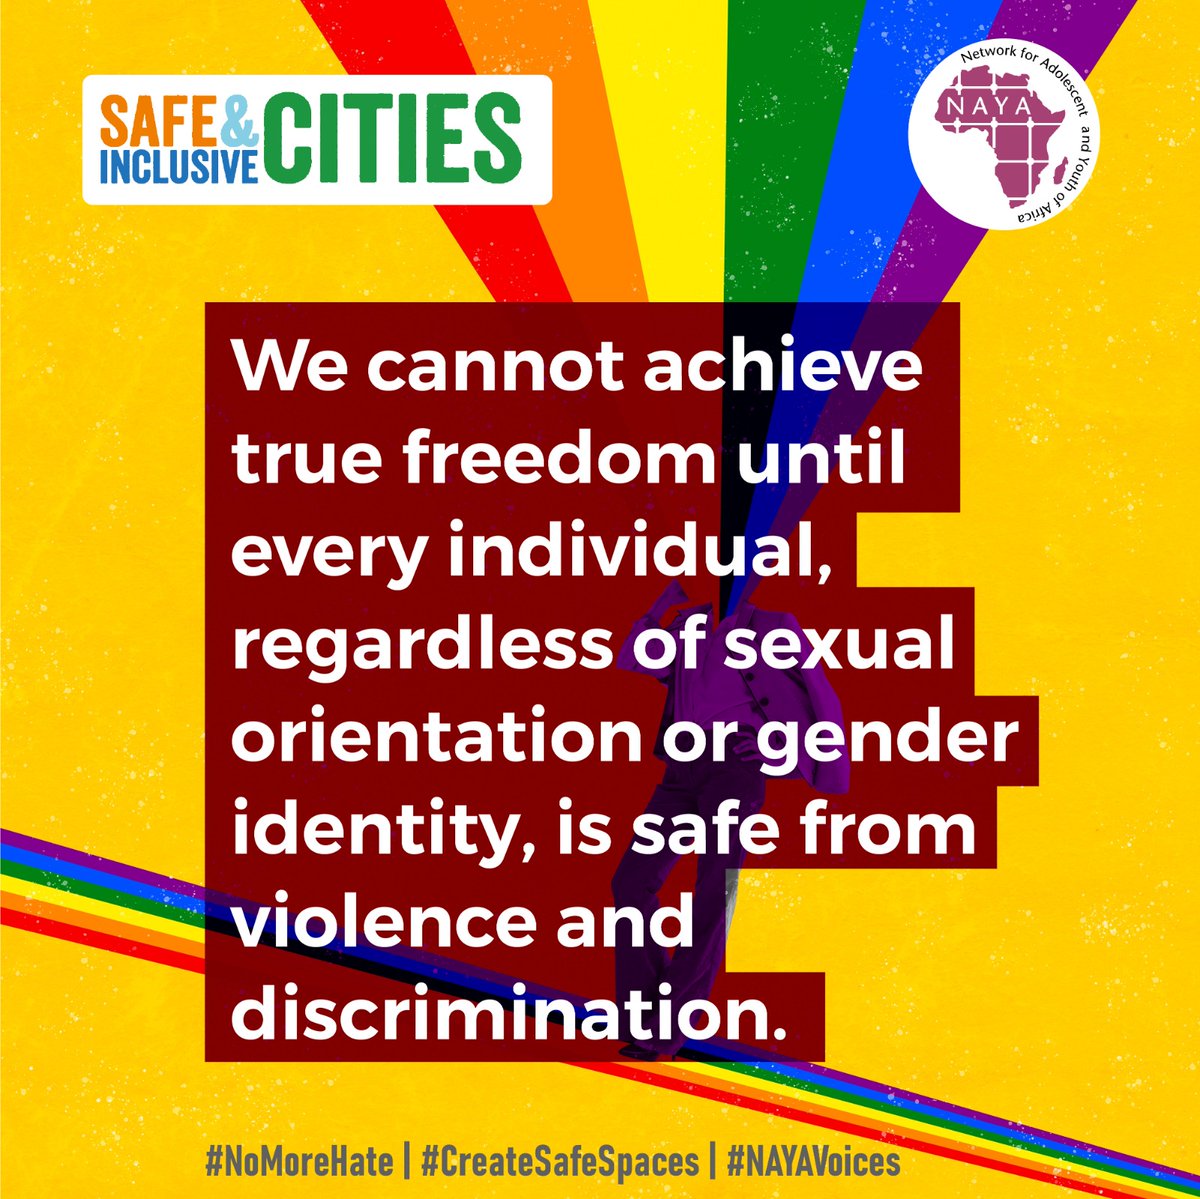 We cannot achieve true freedom until every individual, regardless of sexual orientation or gender identity is safe from violence and discrimination. #NoMoreHate #CreateSafeSpaces #NAYAVoices @RHRNKenya @NAYAKenya @KenyaSRHR @CSA_Kenya @Nairobits @lovemafrica @RaiseYourV_oice